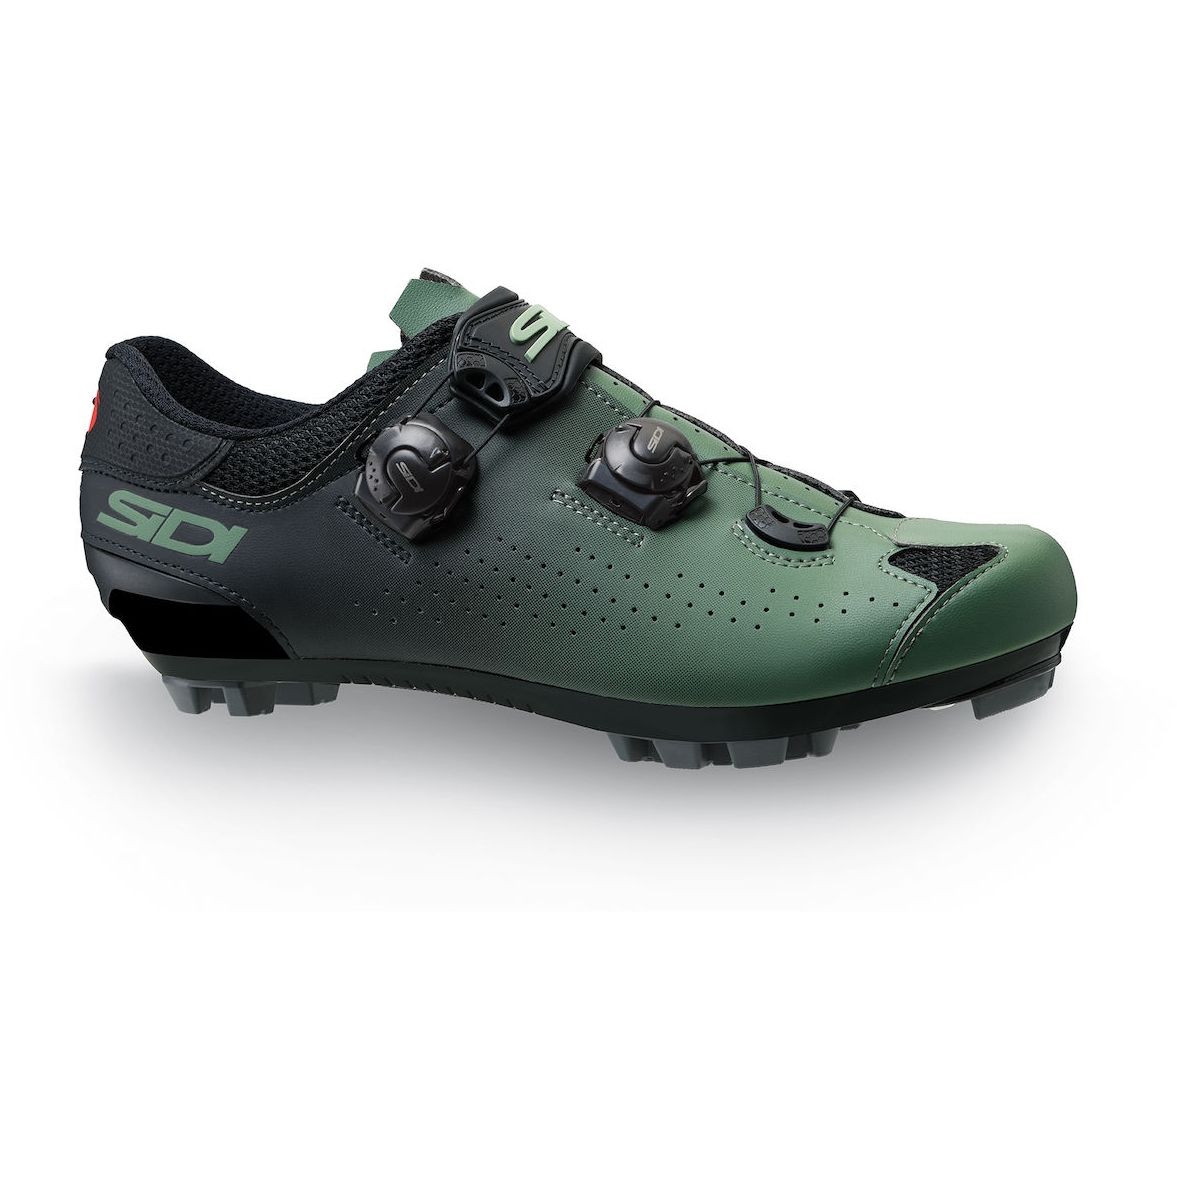 Picture of Sidi Eagle 10 MTB Shoes - Green/Black